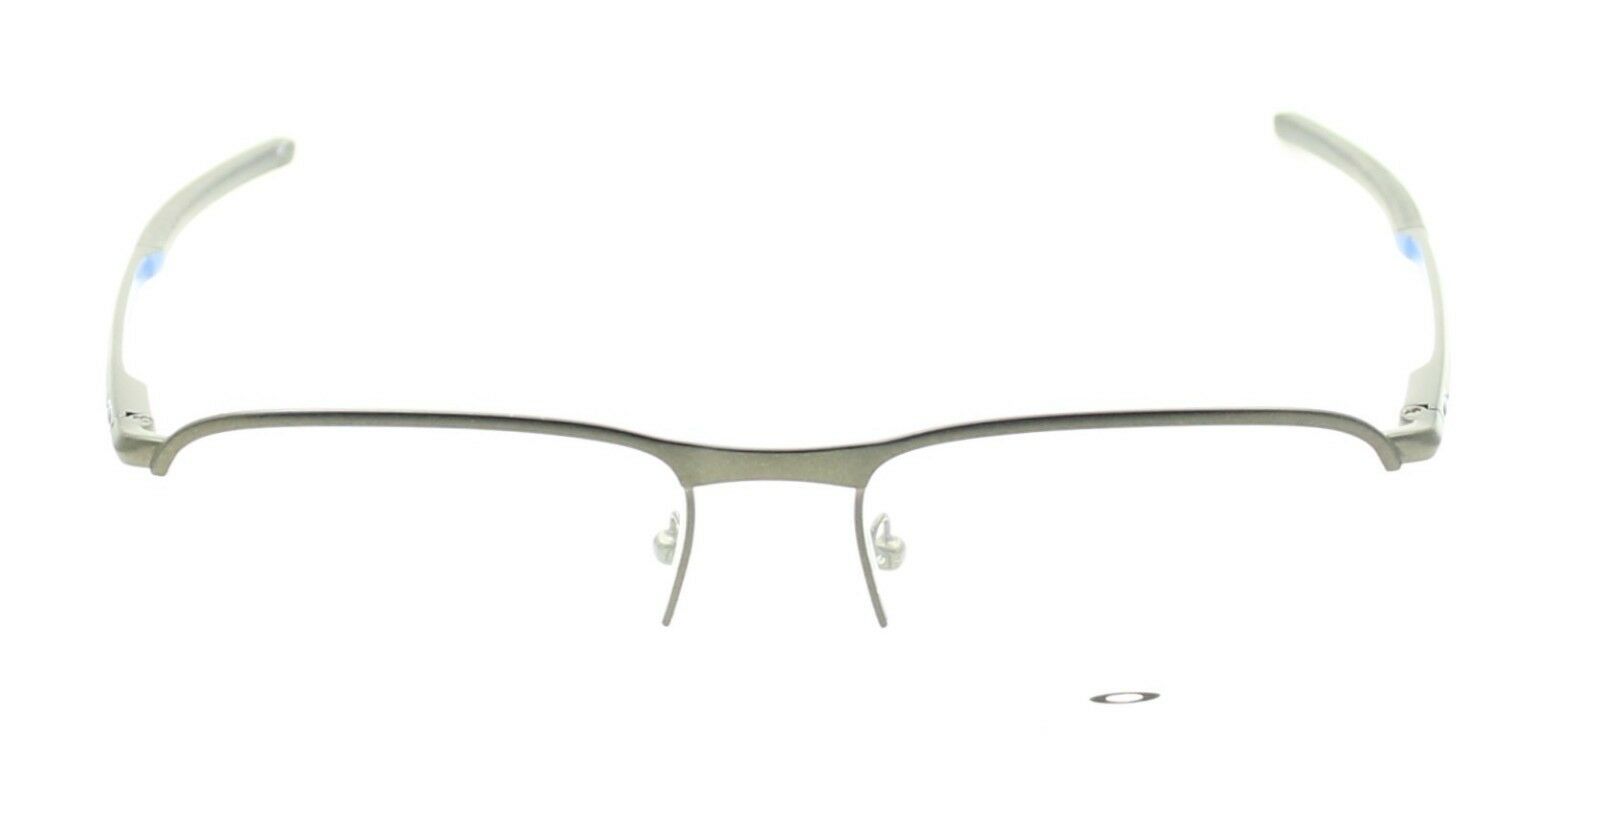 OAKLEY CONDUCTOR  OX3187-0553 Eyewear FRAMES Optical Eyeglasses Glasses  - New - GGV Eyewear